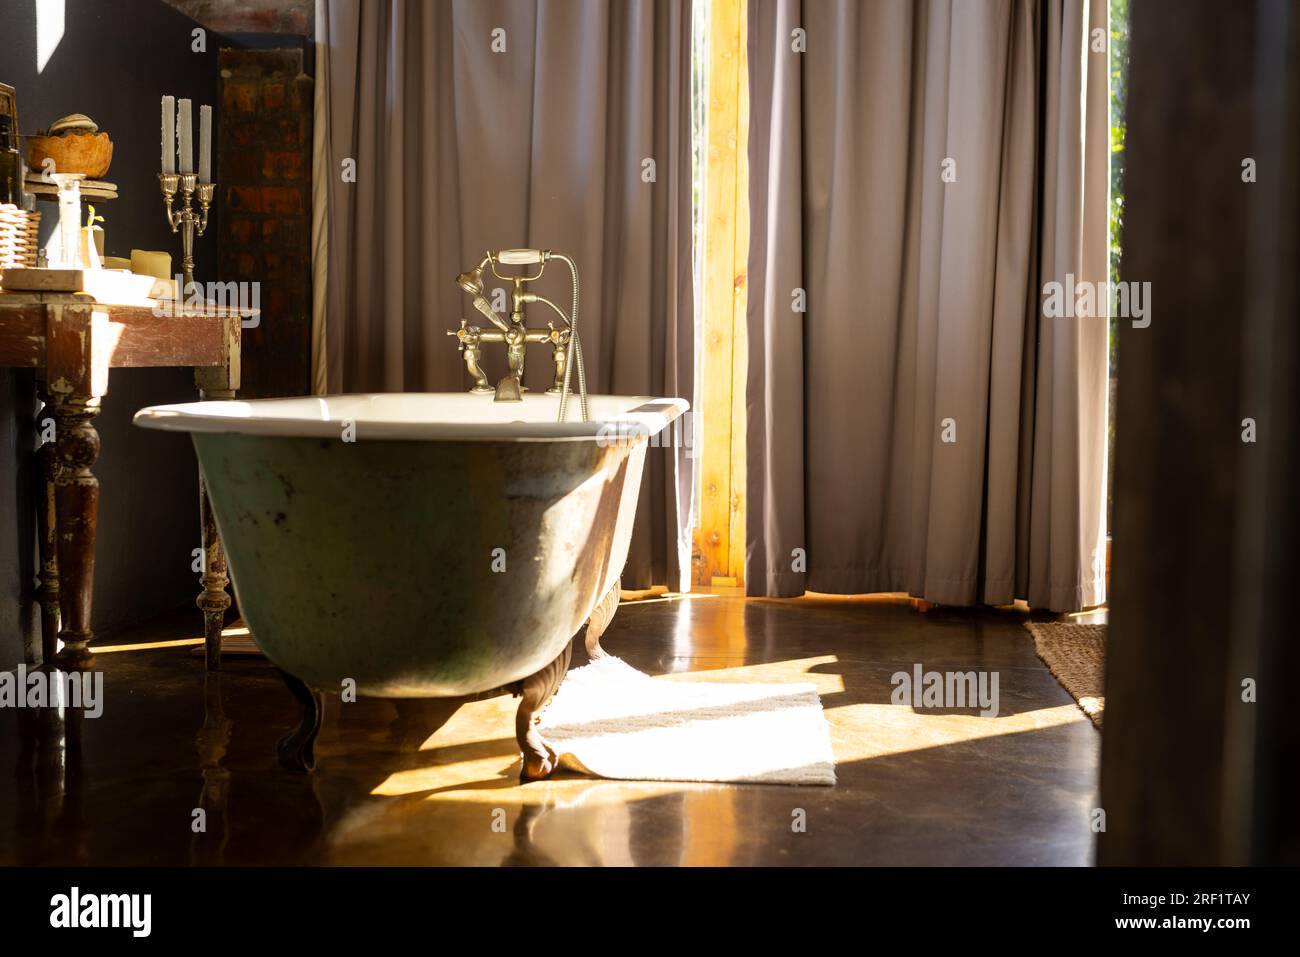 Vintage freestanding bathtub in sunny bathroom at home Stock Photo